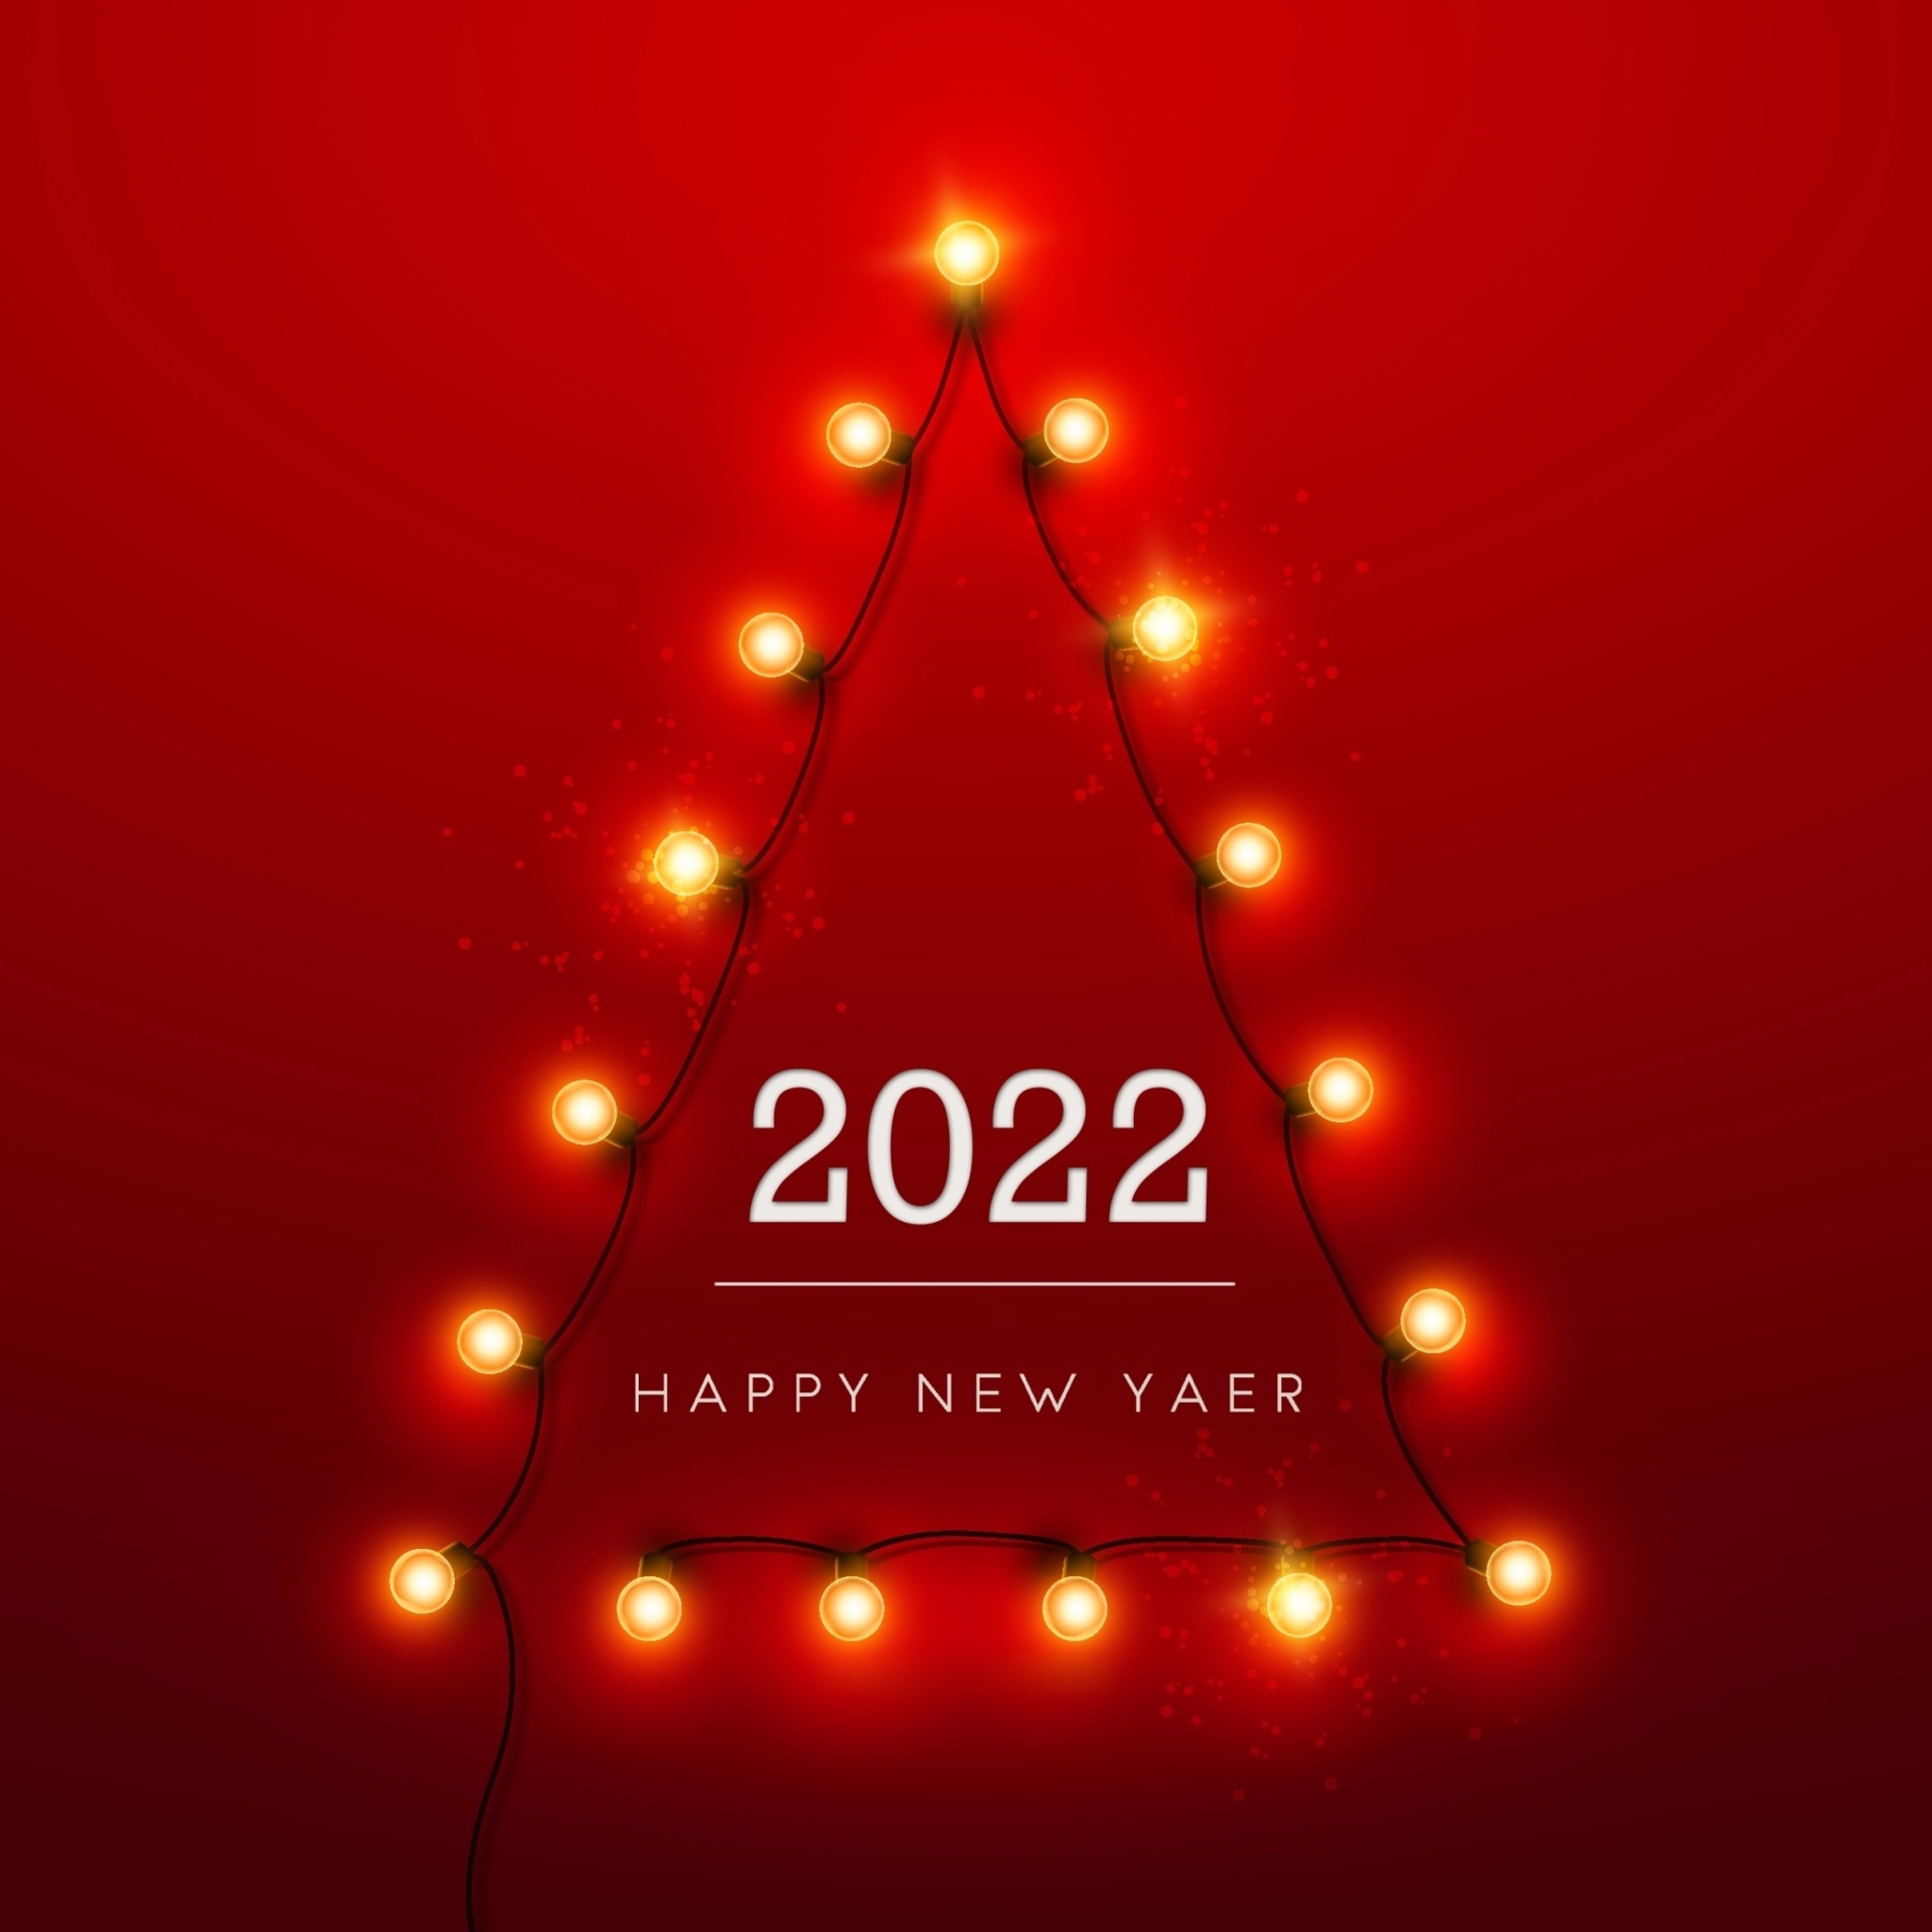 Happy New Year 2022 wallpaper 2048x2048